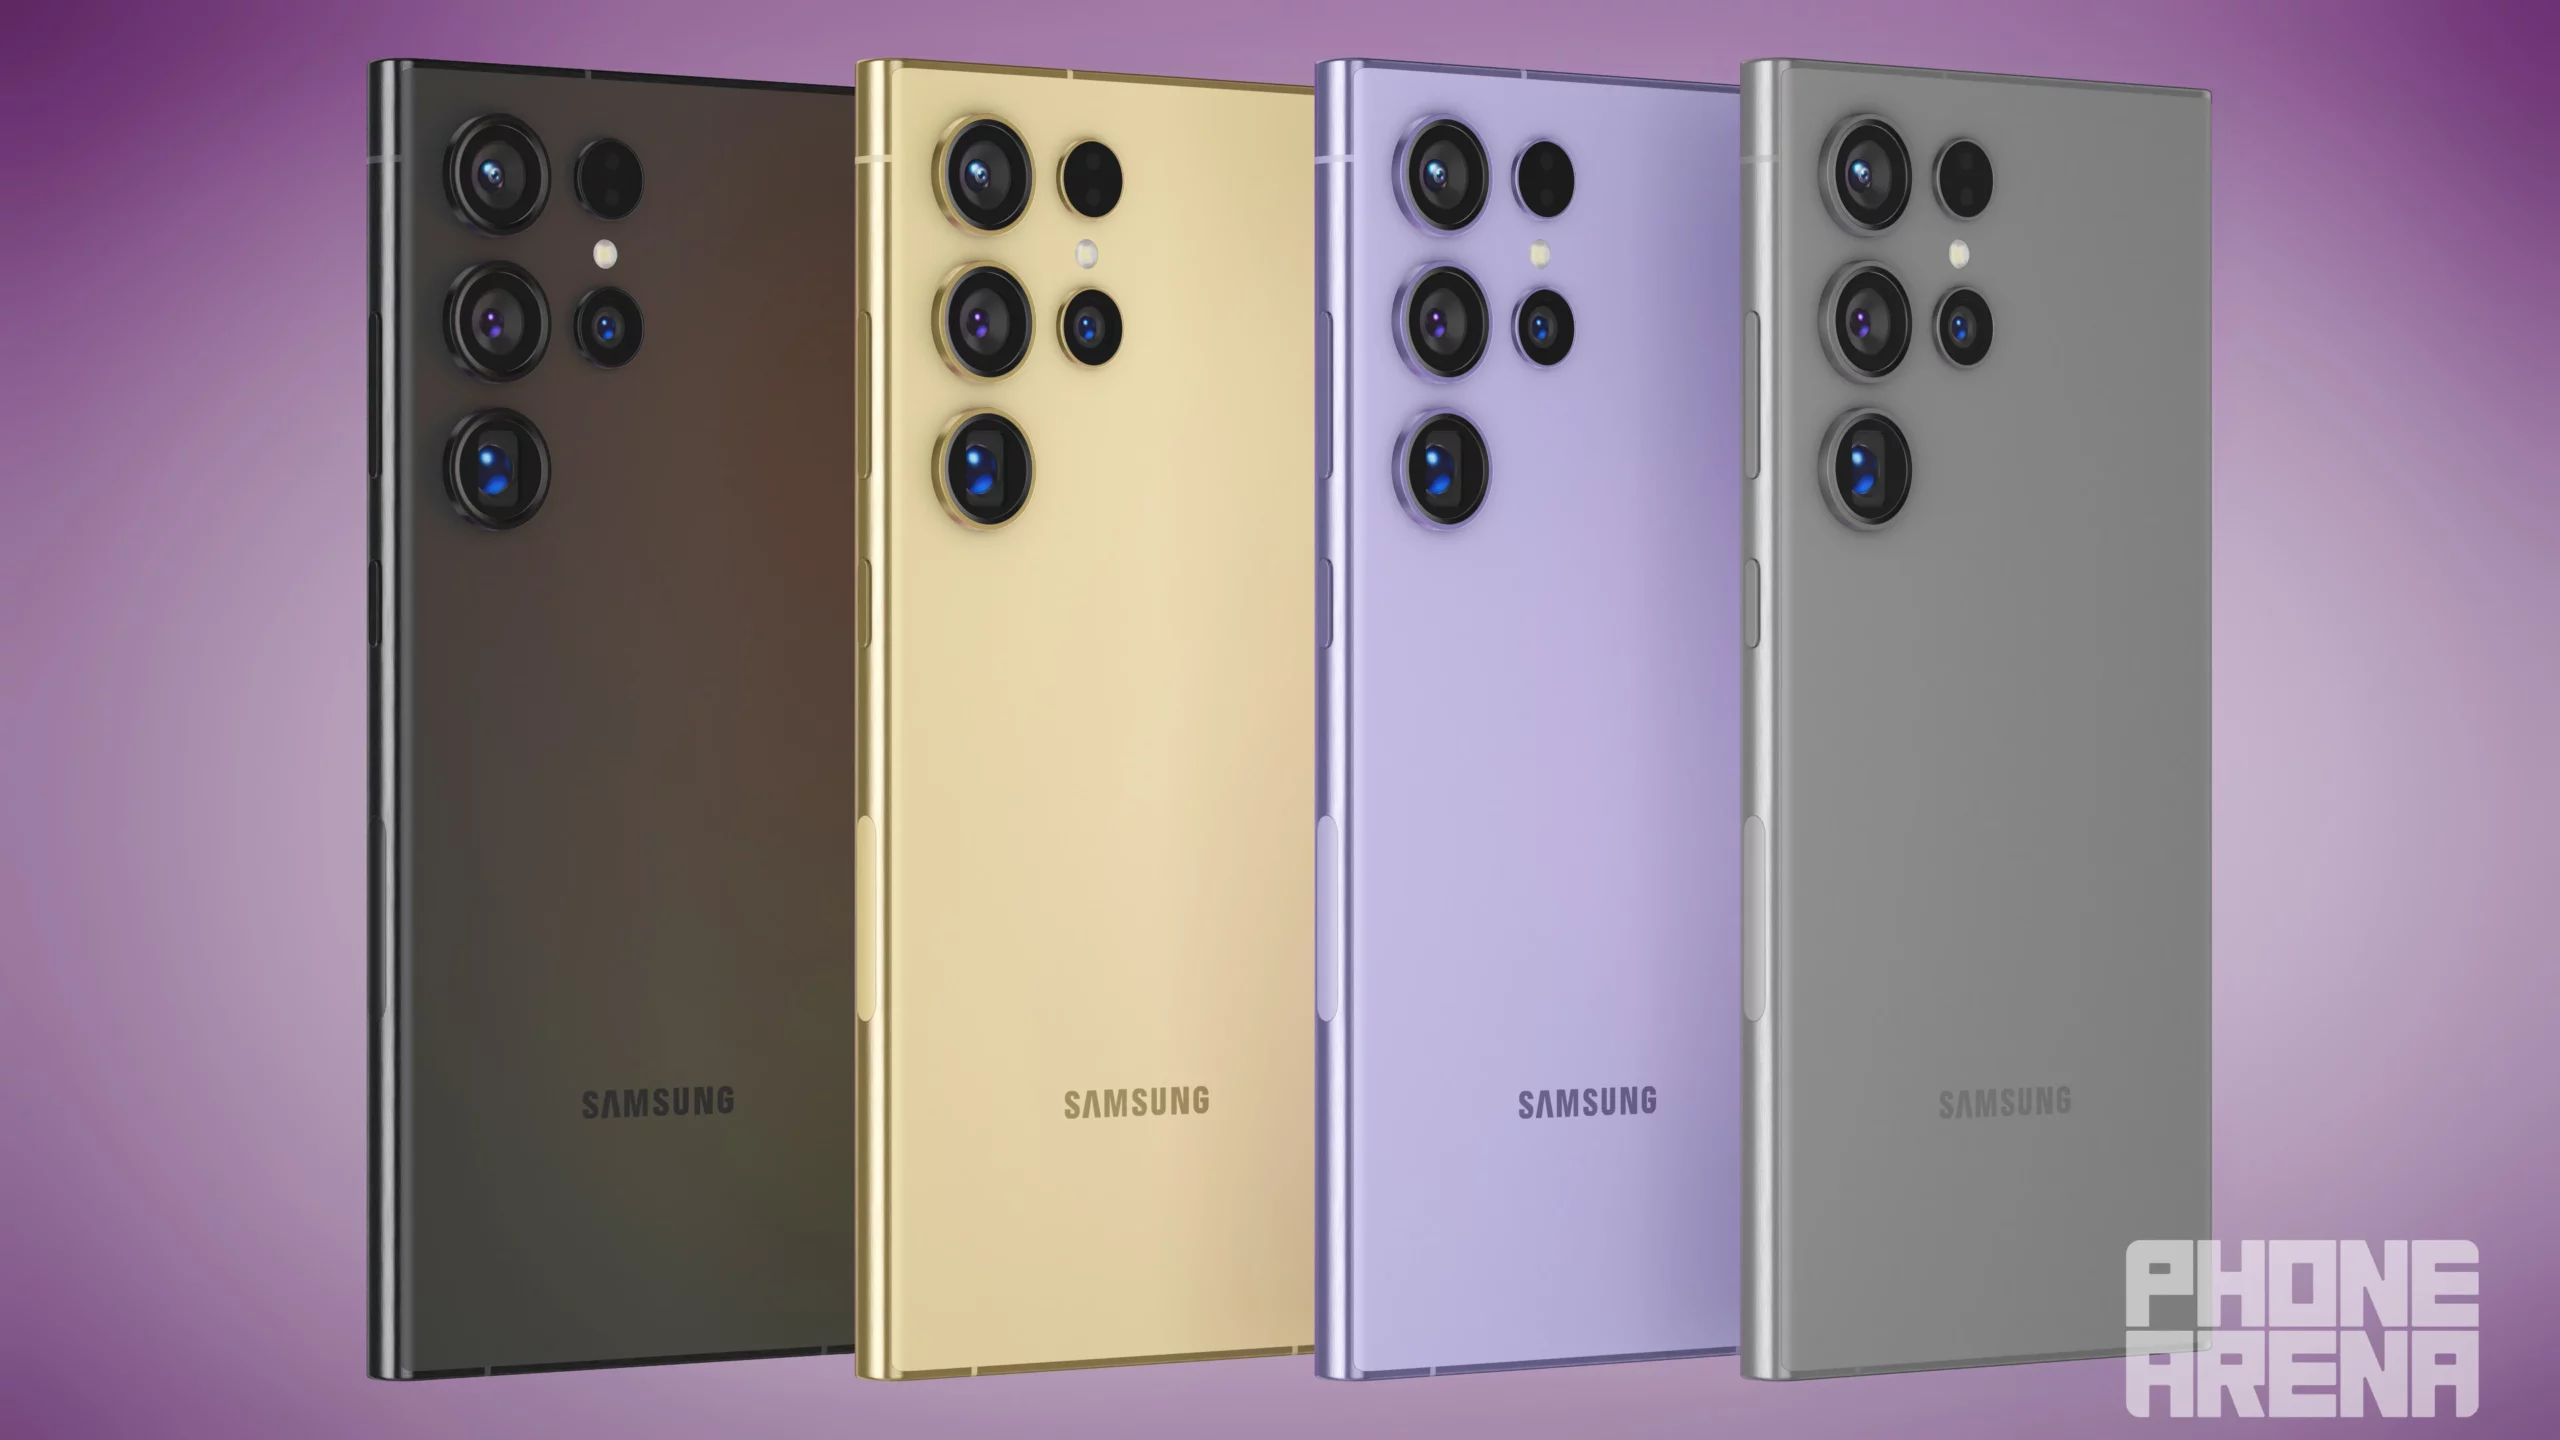 Samsung GALAXY Note specs - PhoneArena